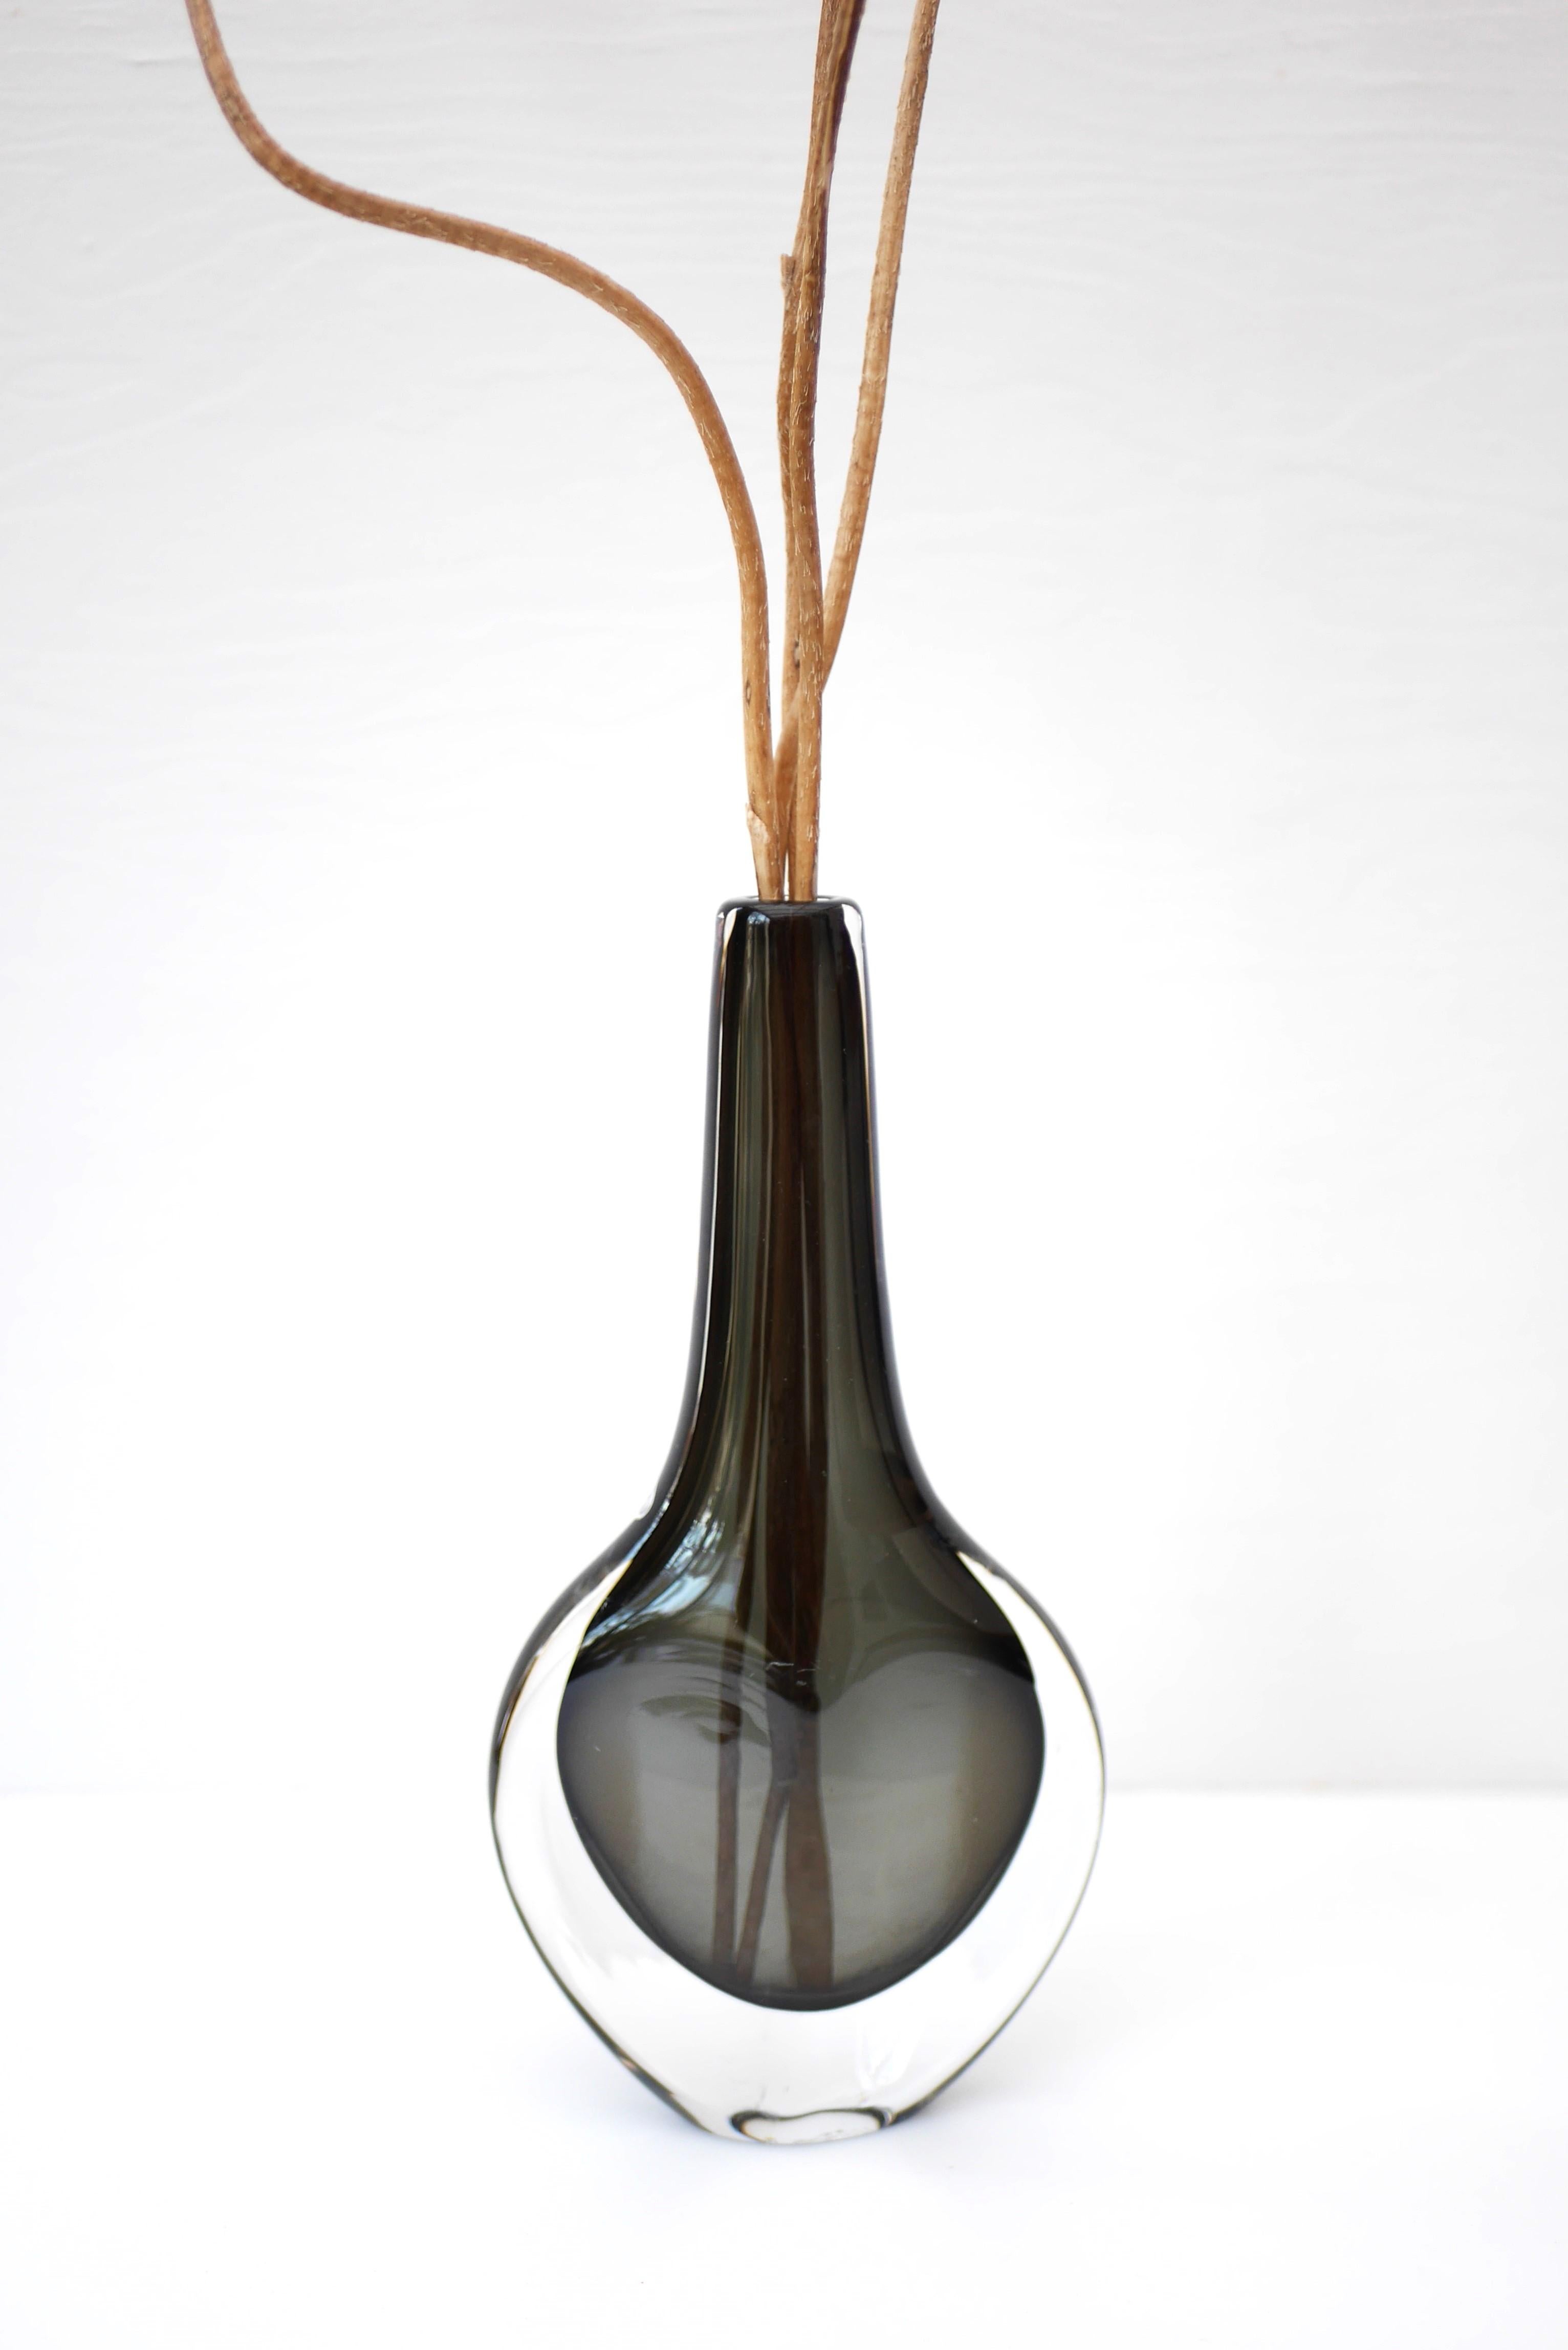 Hand-Crafted Nils Landberg Glass Vase 